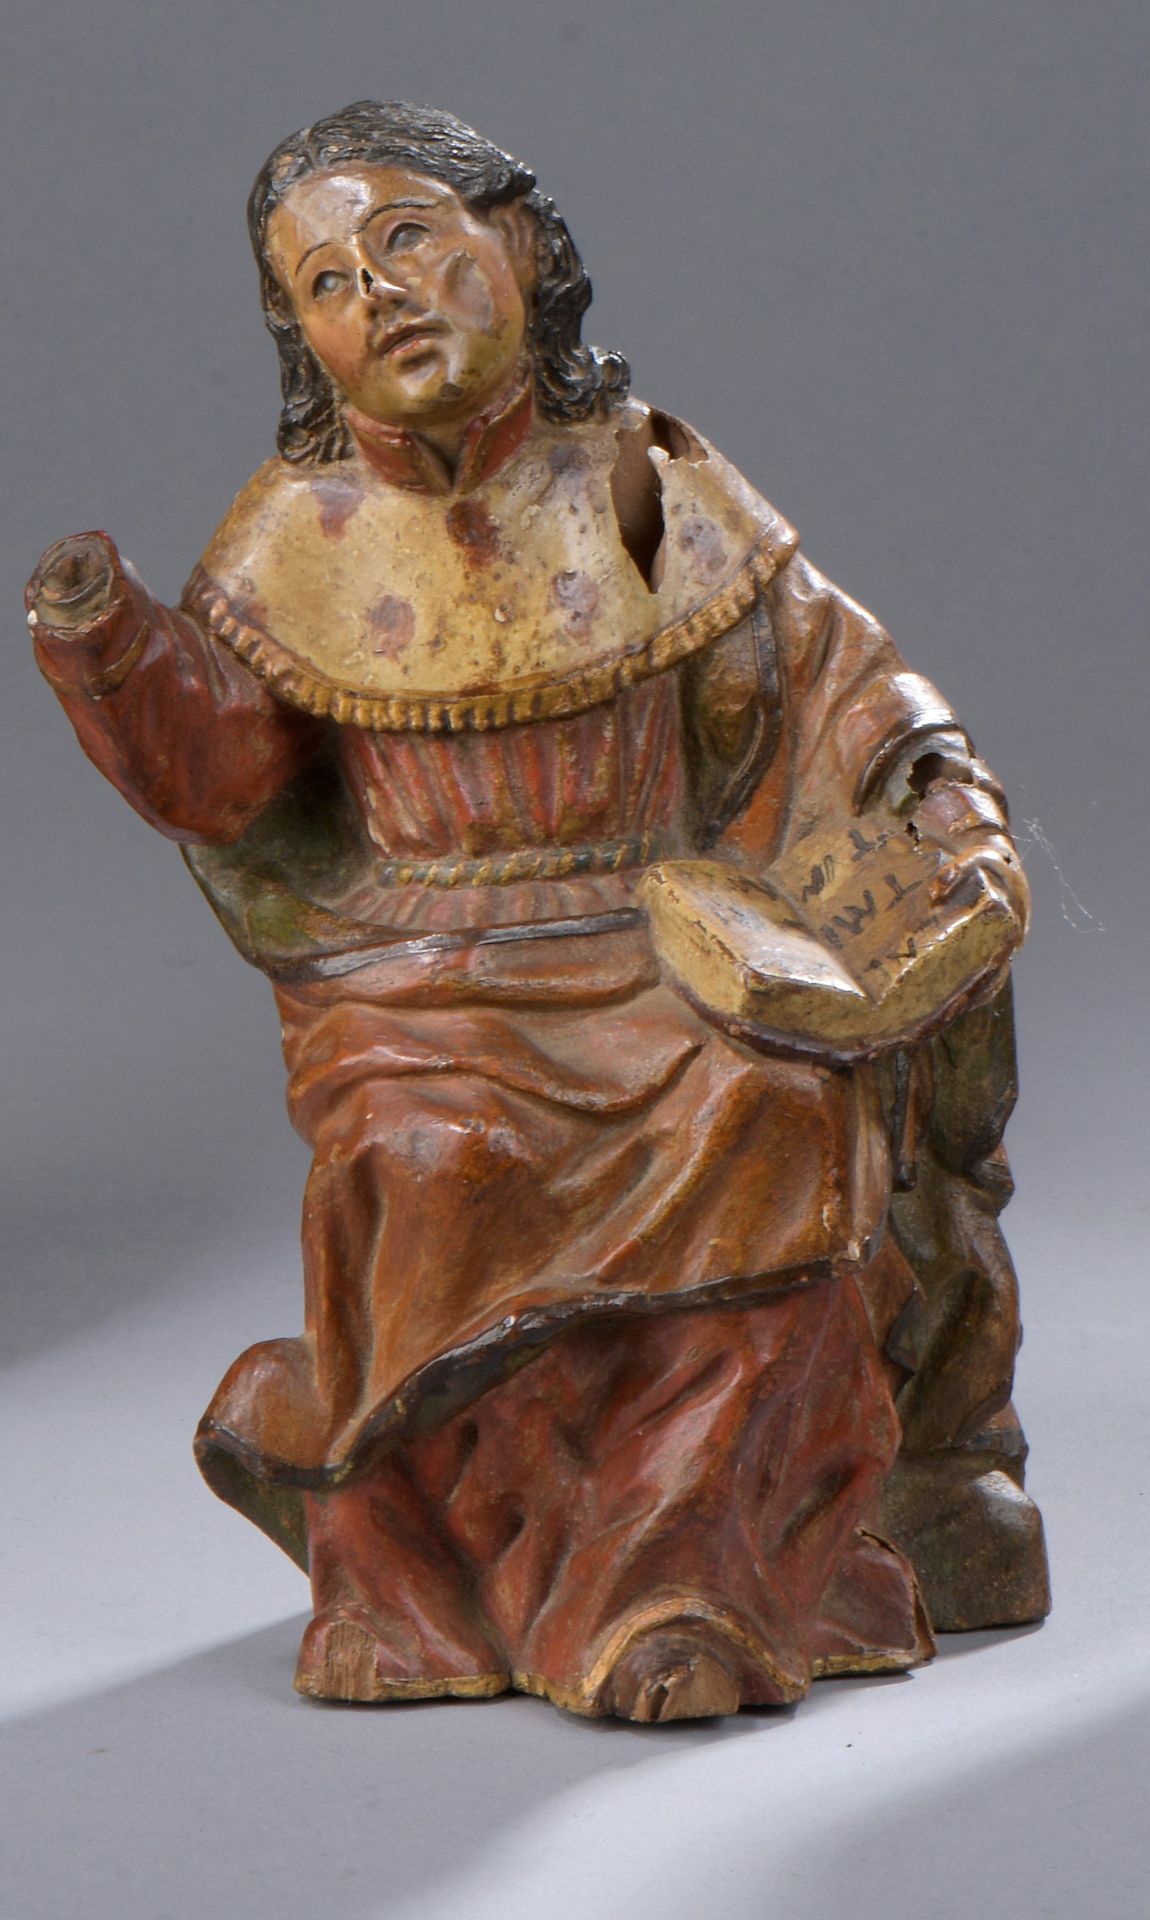 Null 木质圆雕的圣-福音战士，多色的，玻璃眼睛。

西班牙殖民地，18世纪

H.20厘米

墨水的收藏标记。

(失误和事故)